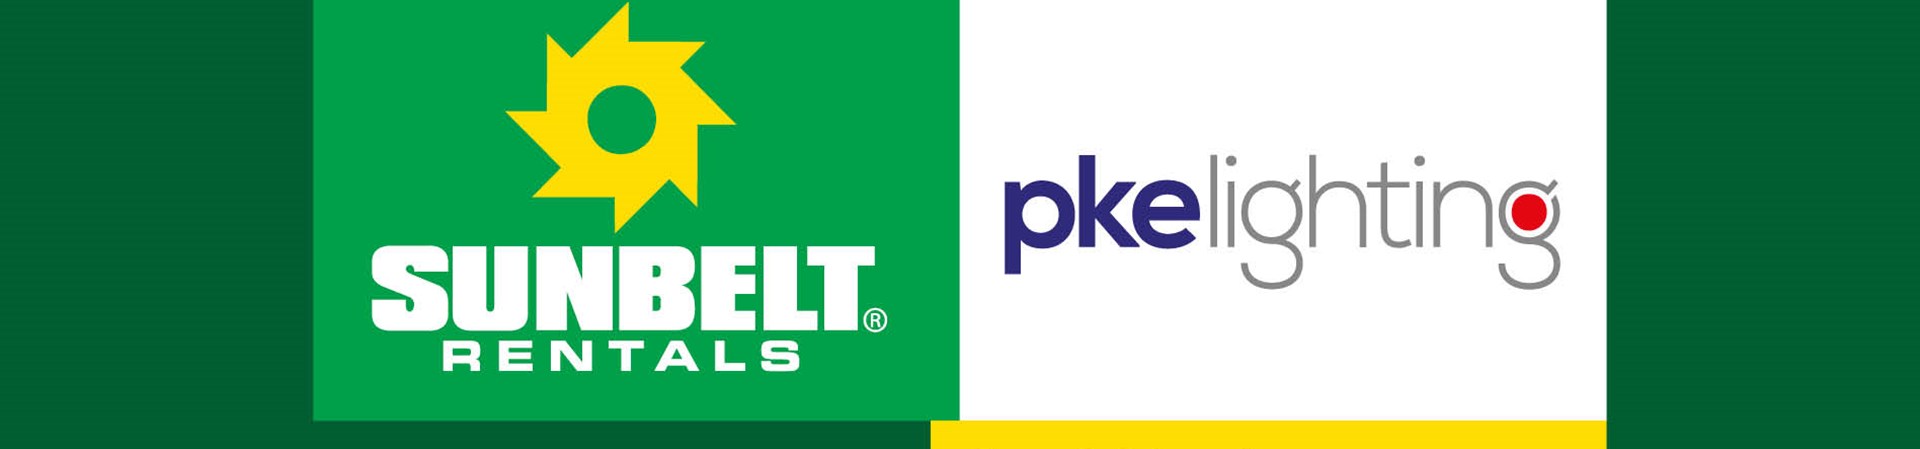 Sunbelt Rentals Acquires PKE Lighting Graphic 